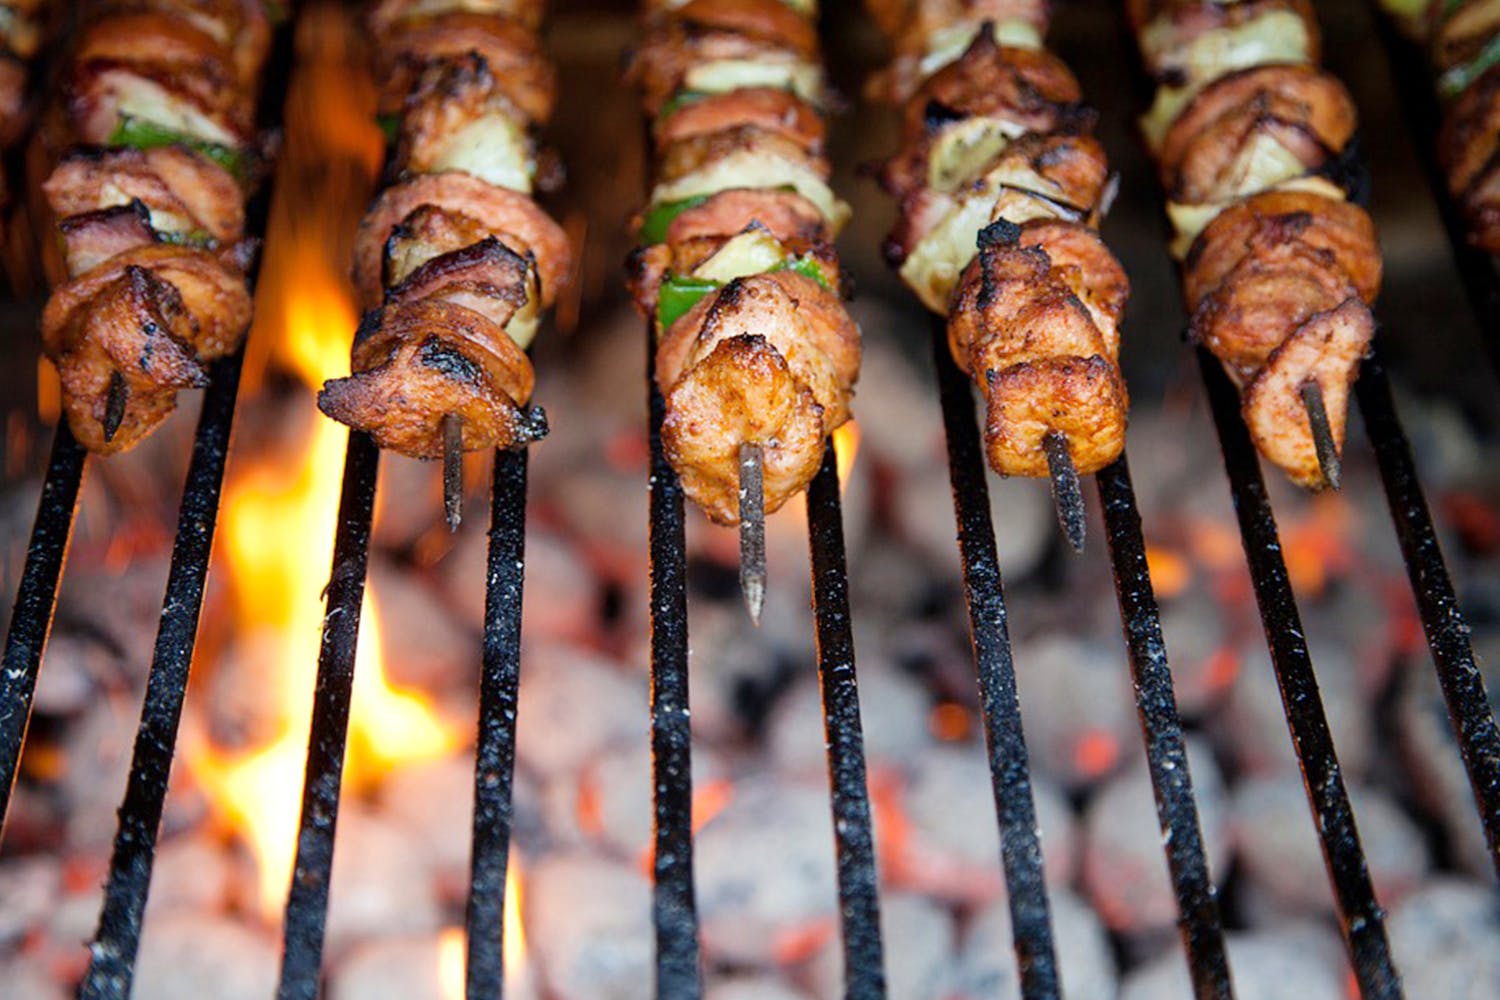 Barbecue,Grilling,Shashlik,Roasting,Souvlaki,Churrasco food,Cuisine,Skewer,Arrosticini,Barbecue grill